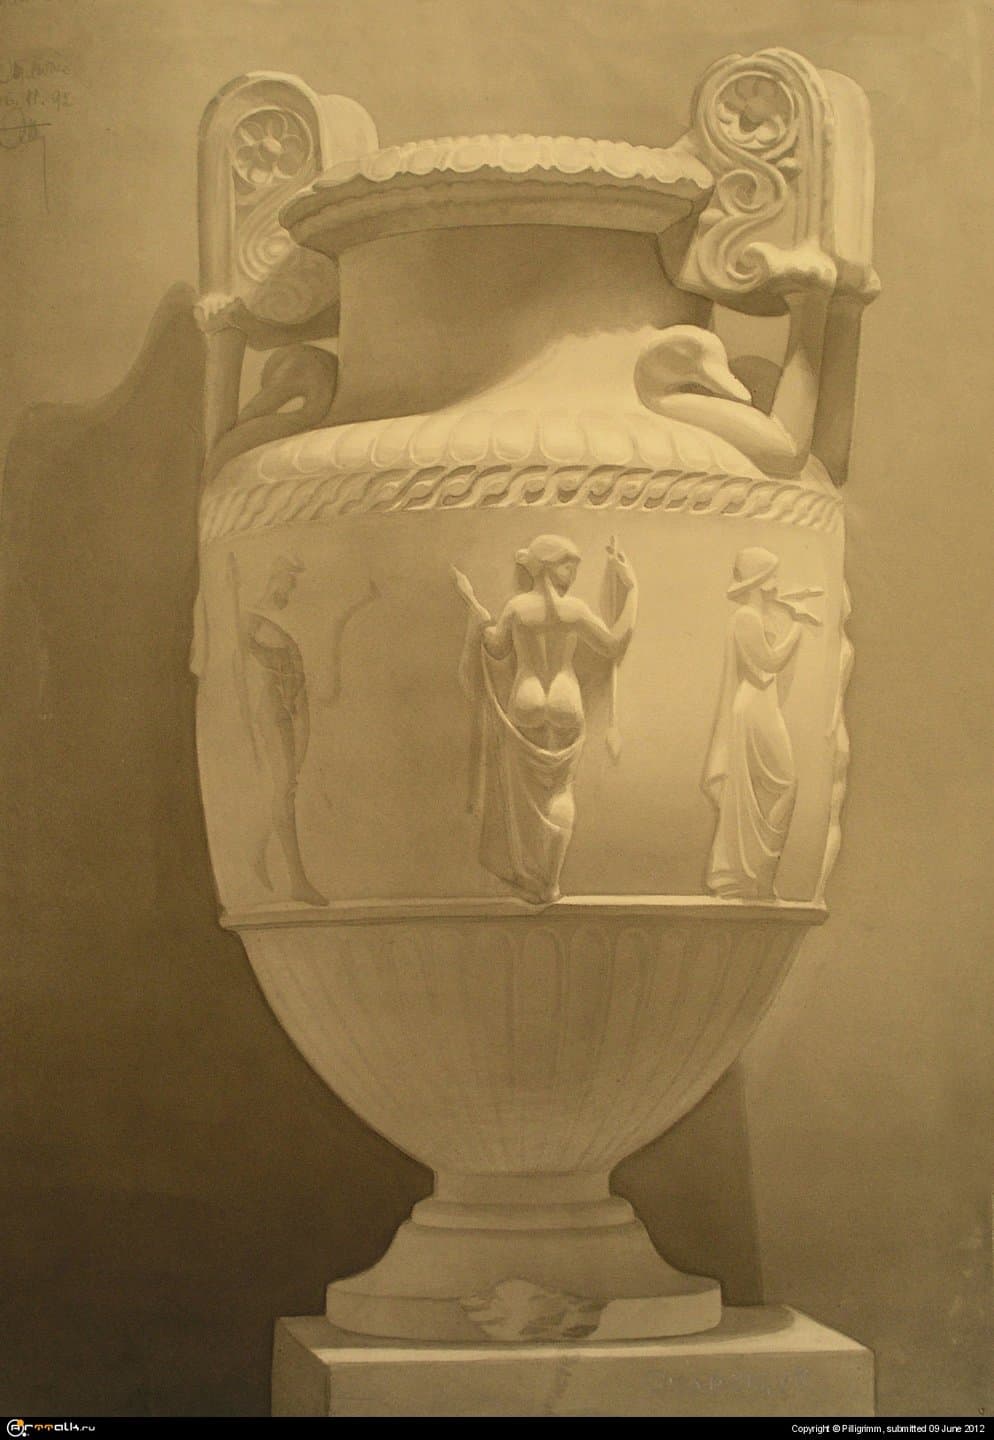 Античная ваза